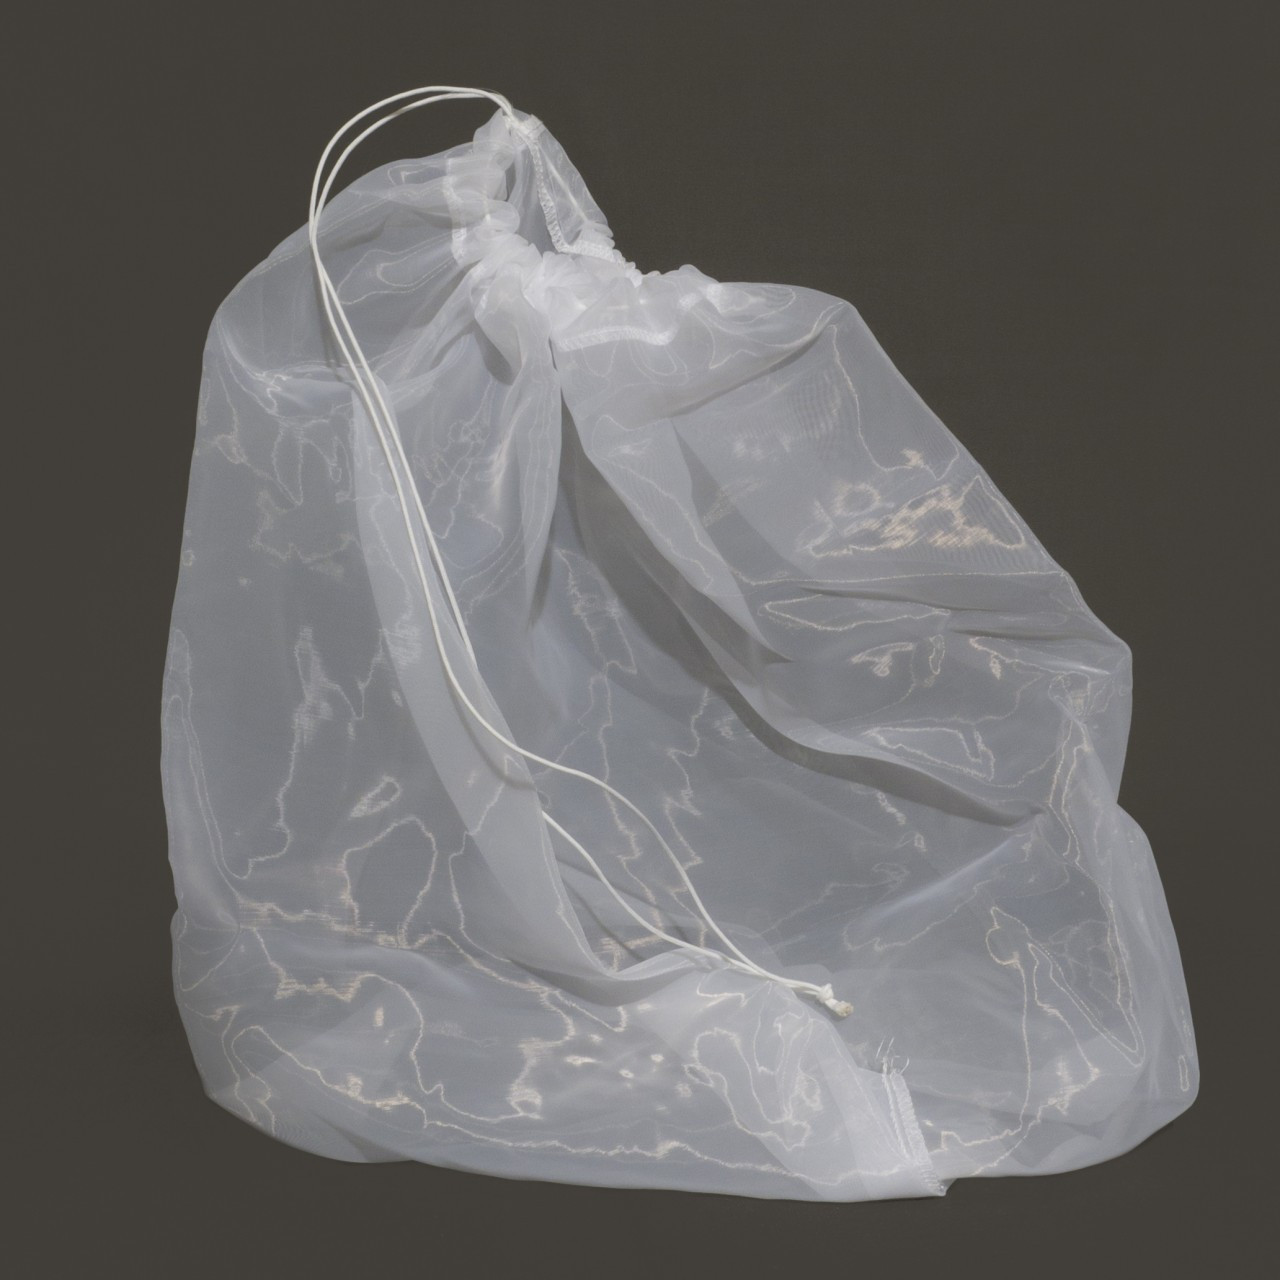 Net Bag 15 gallon size-Net Bag 15 gal